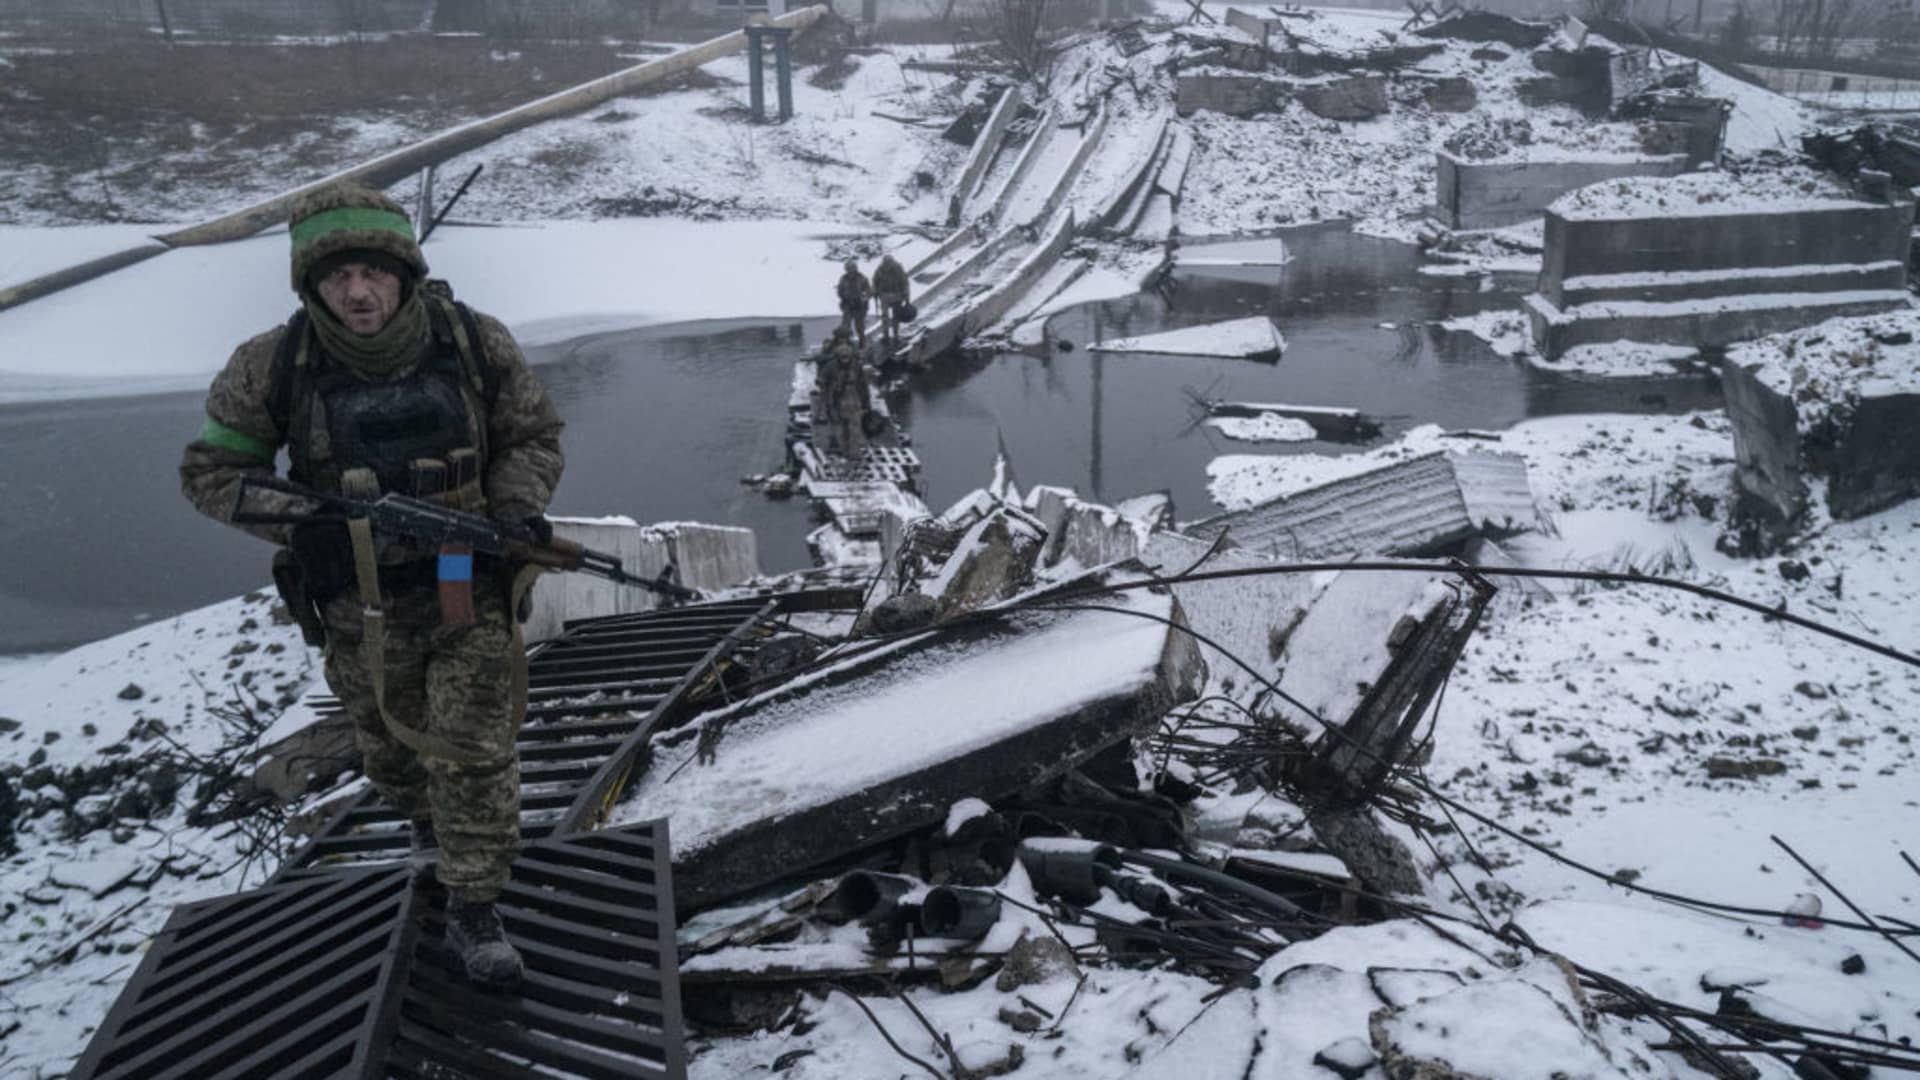 Ukrainian soldiers return from the front line in Bakhmut, Ukraine on Jan. 29, 2023.